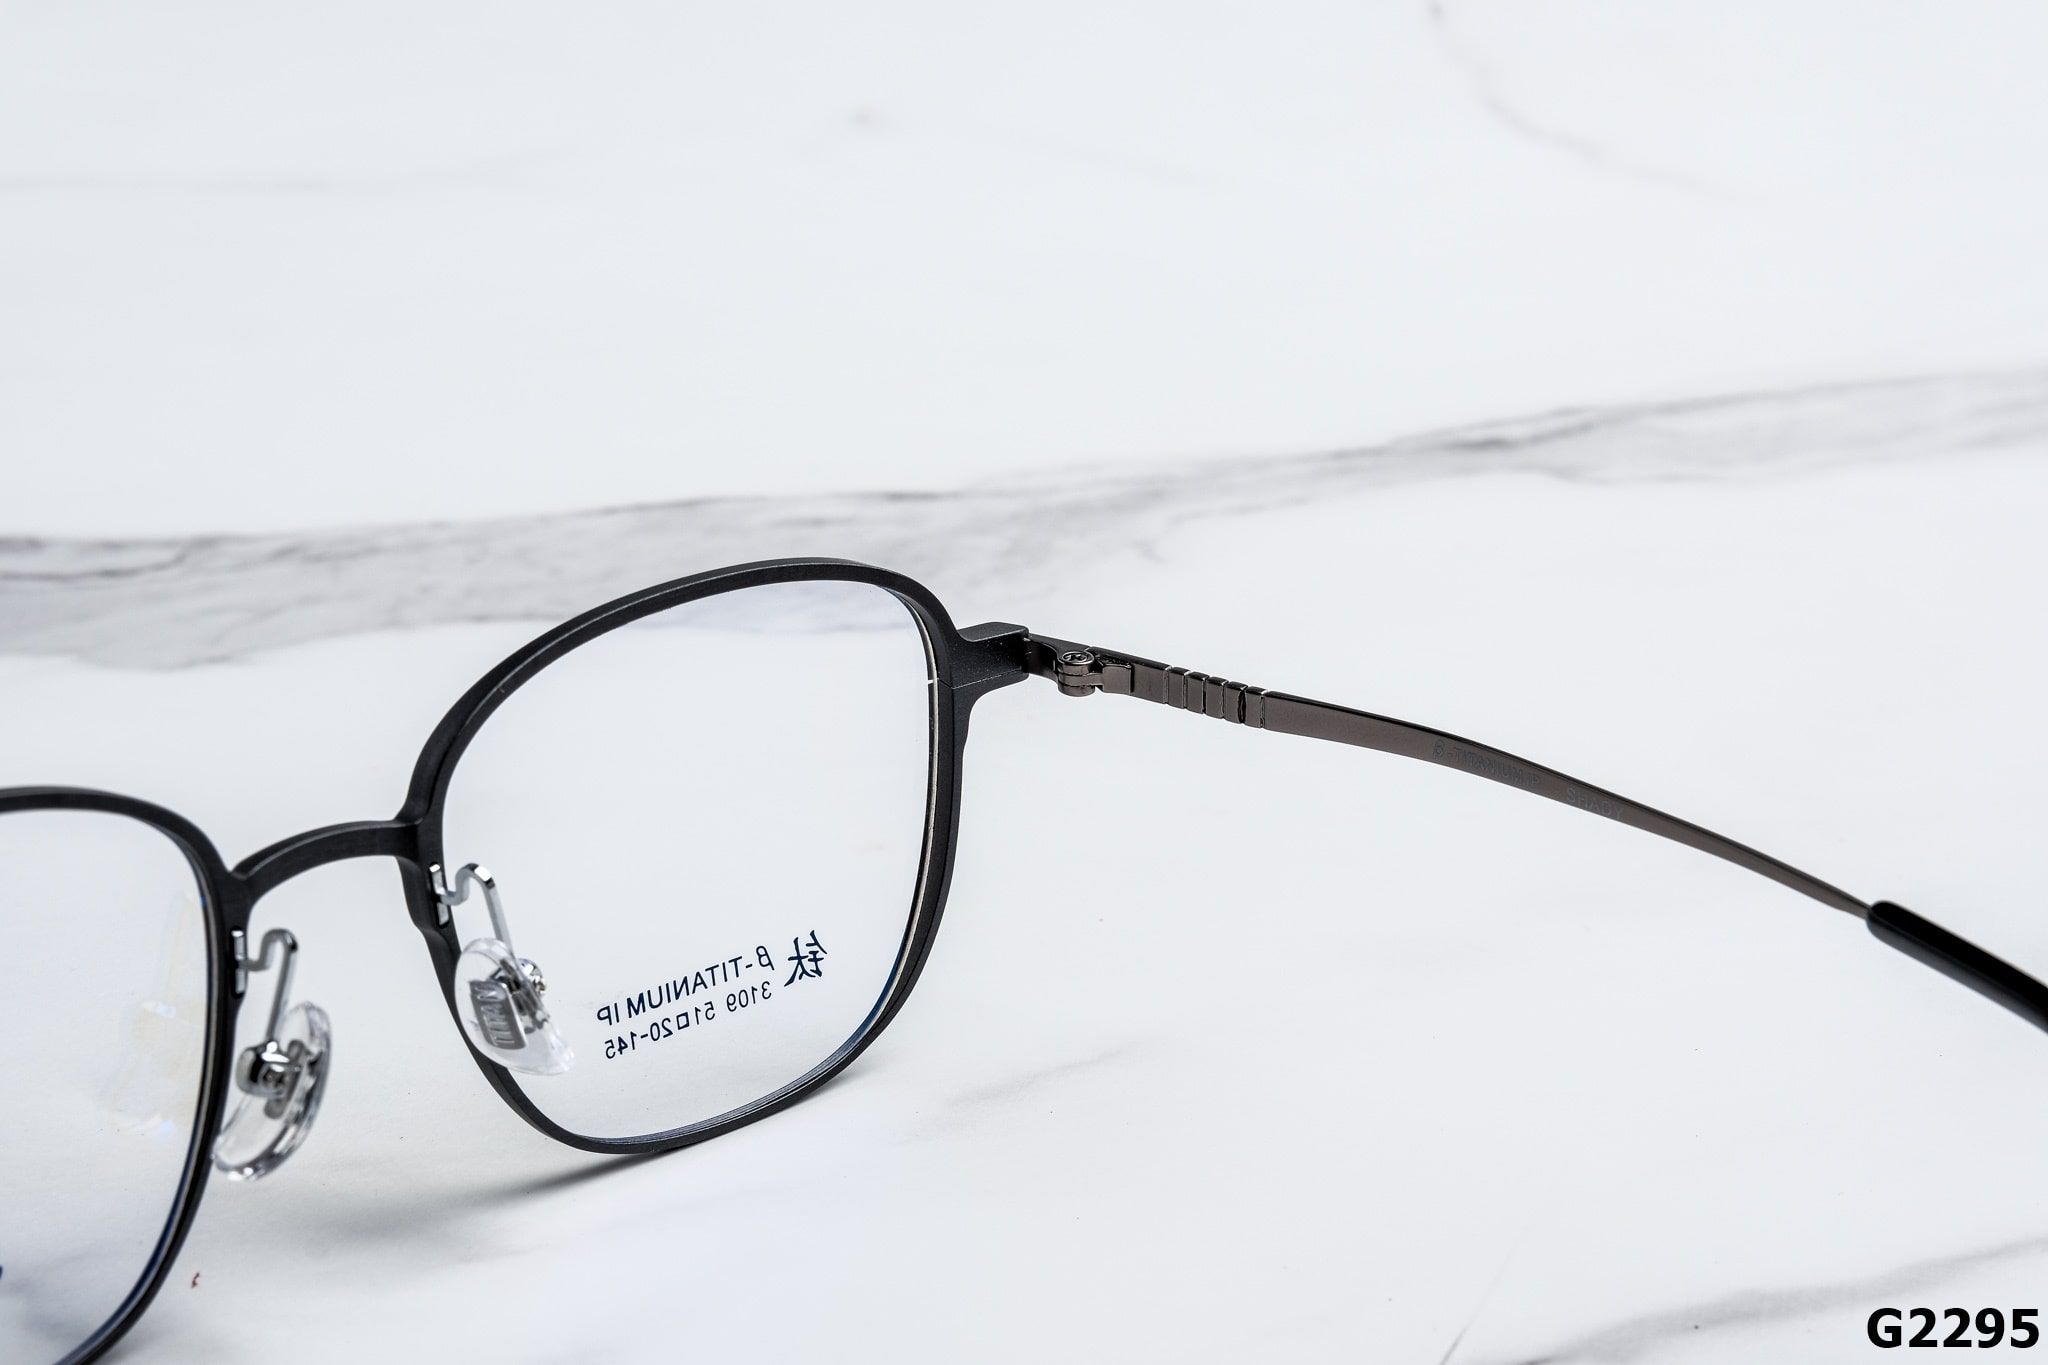  SHADY Eyewear - Glasses - G2295 